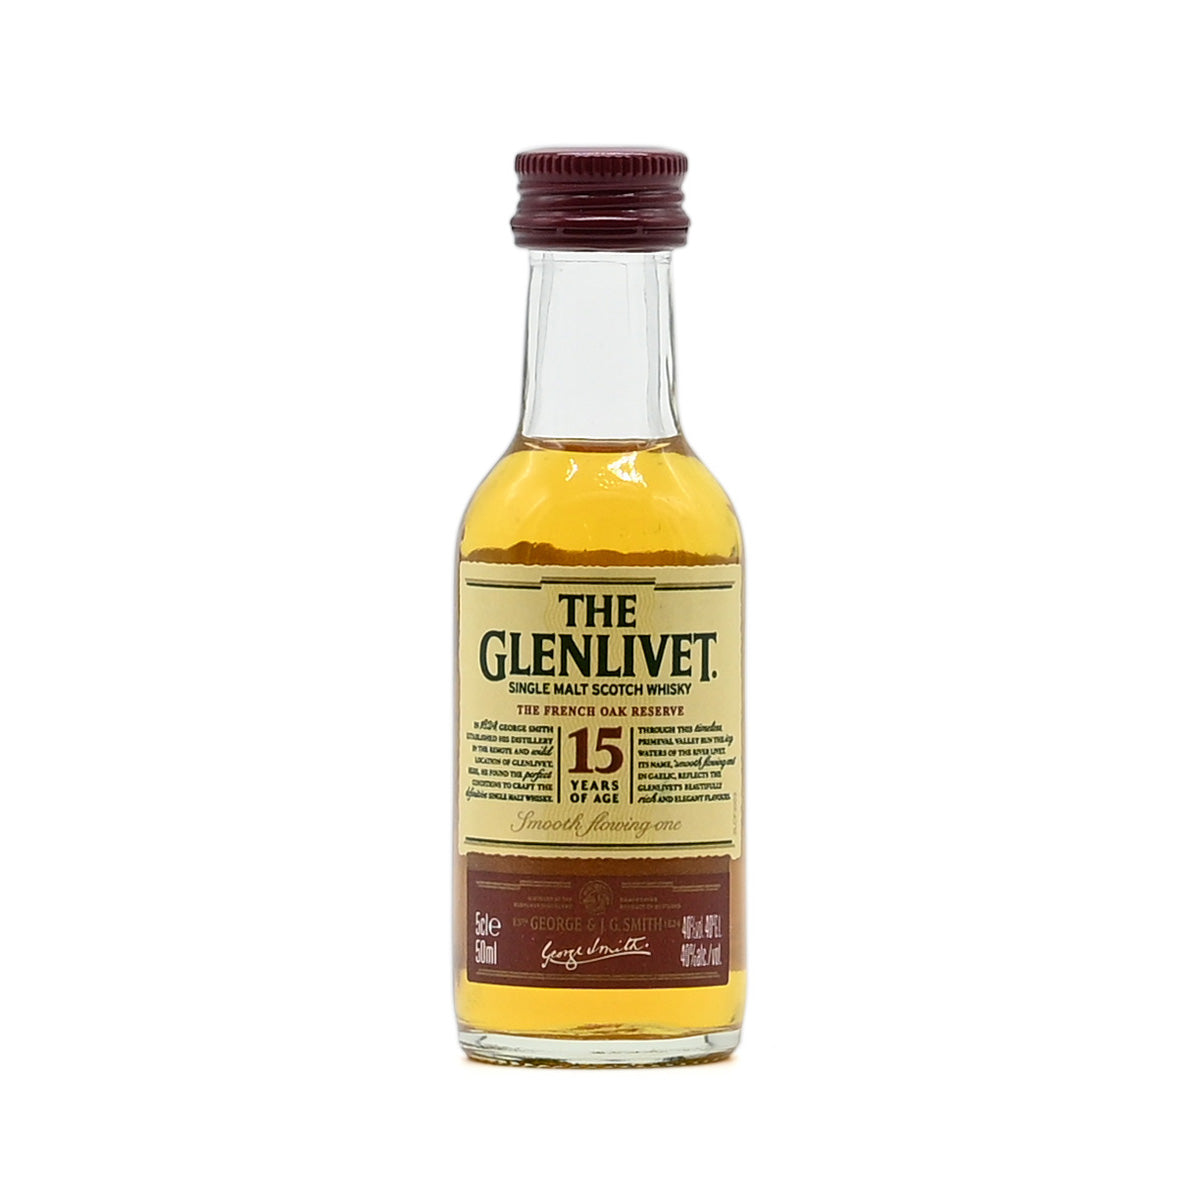 The Glenlivet 15 years old single malt Scotch Whisky in 50ml bottle, from Speyside, Scotland – GDV Fine Wines, Hong Kong